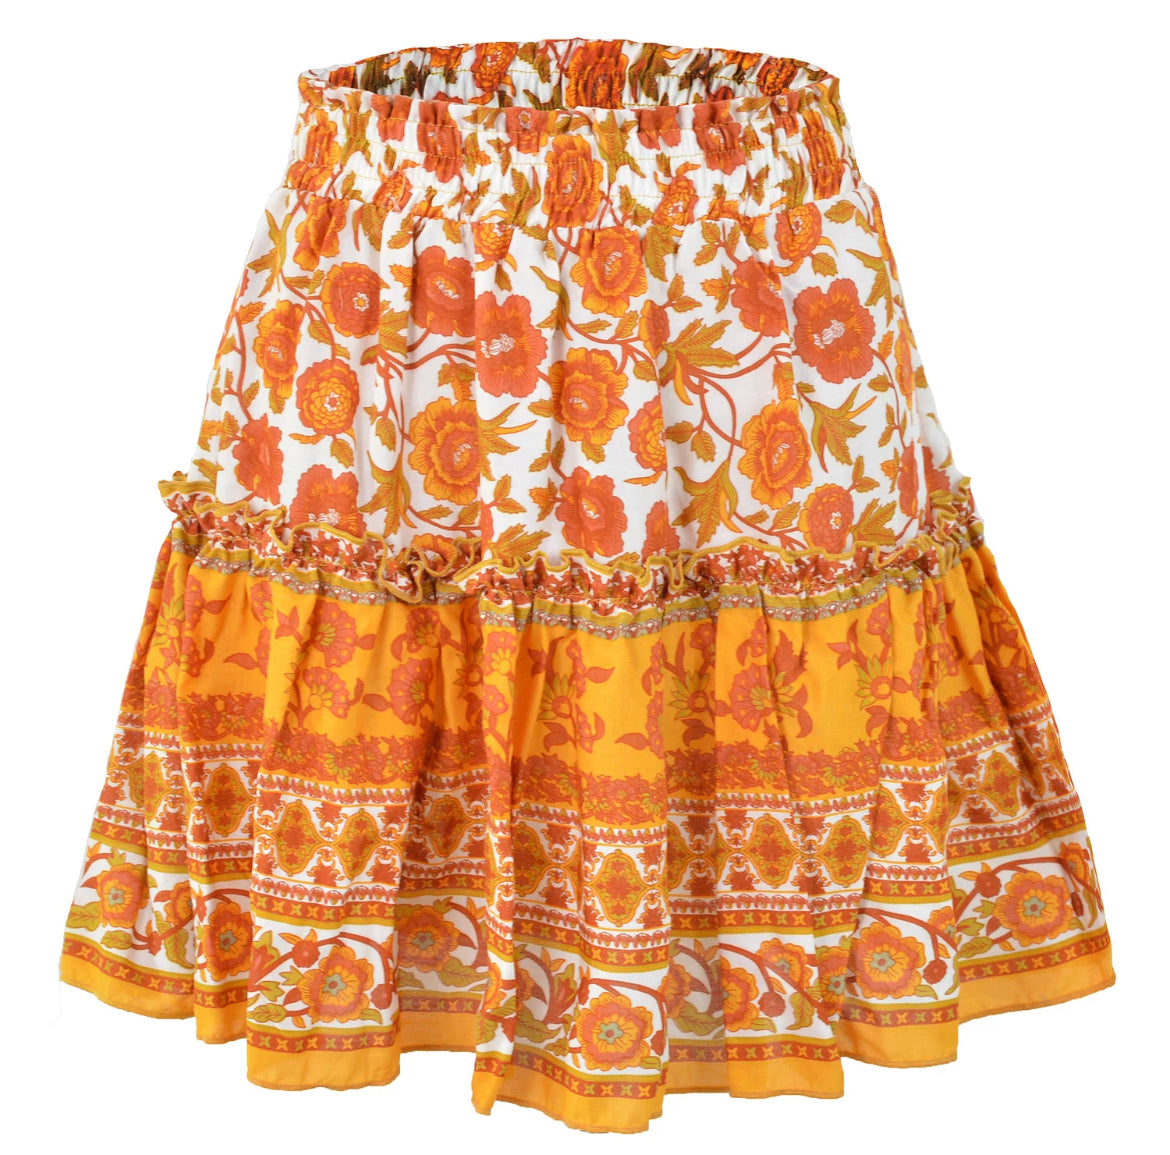 Beautiful ladies floral mini skirt